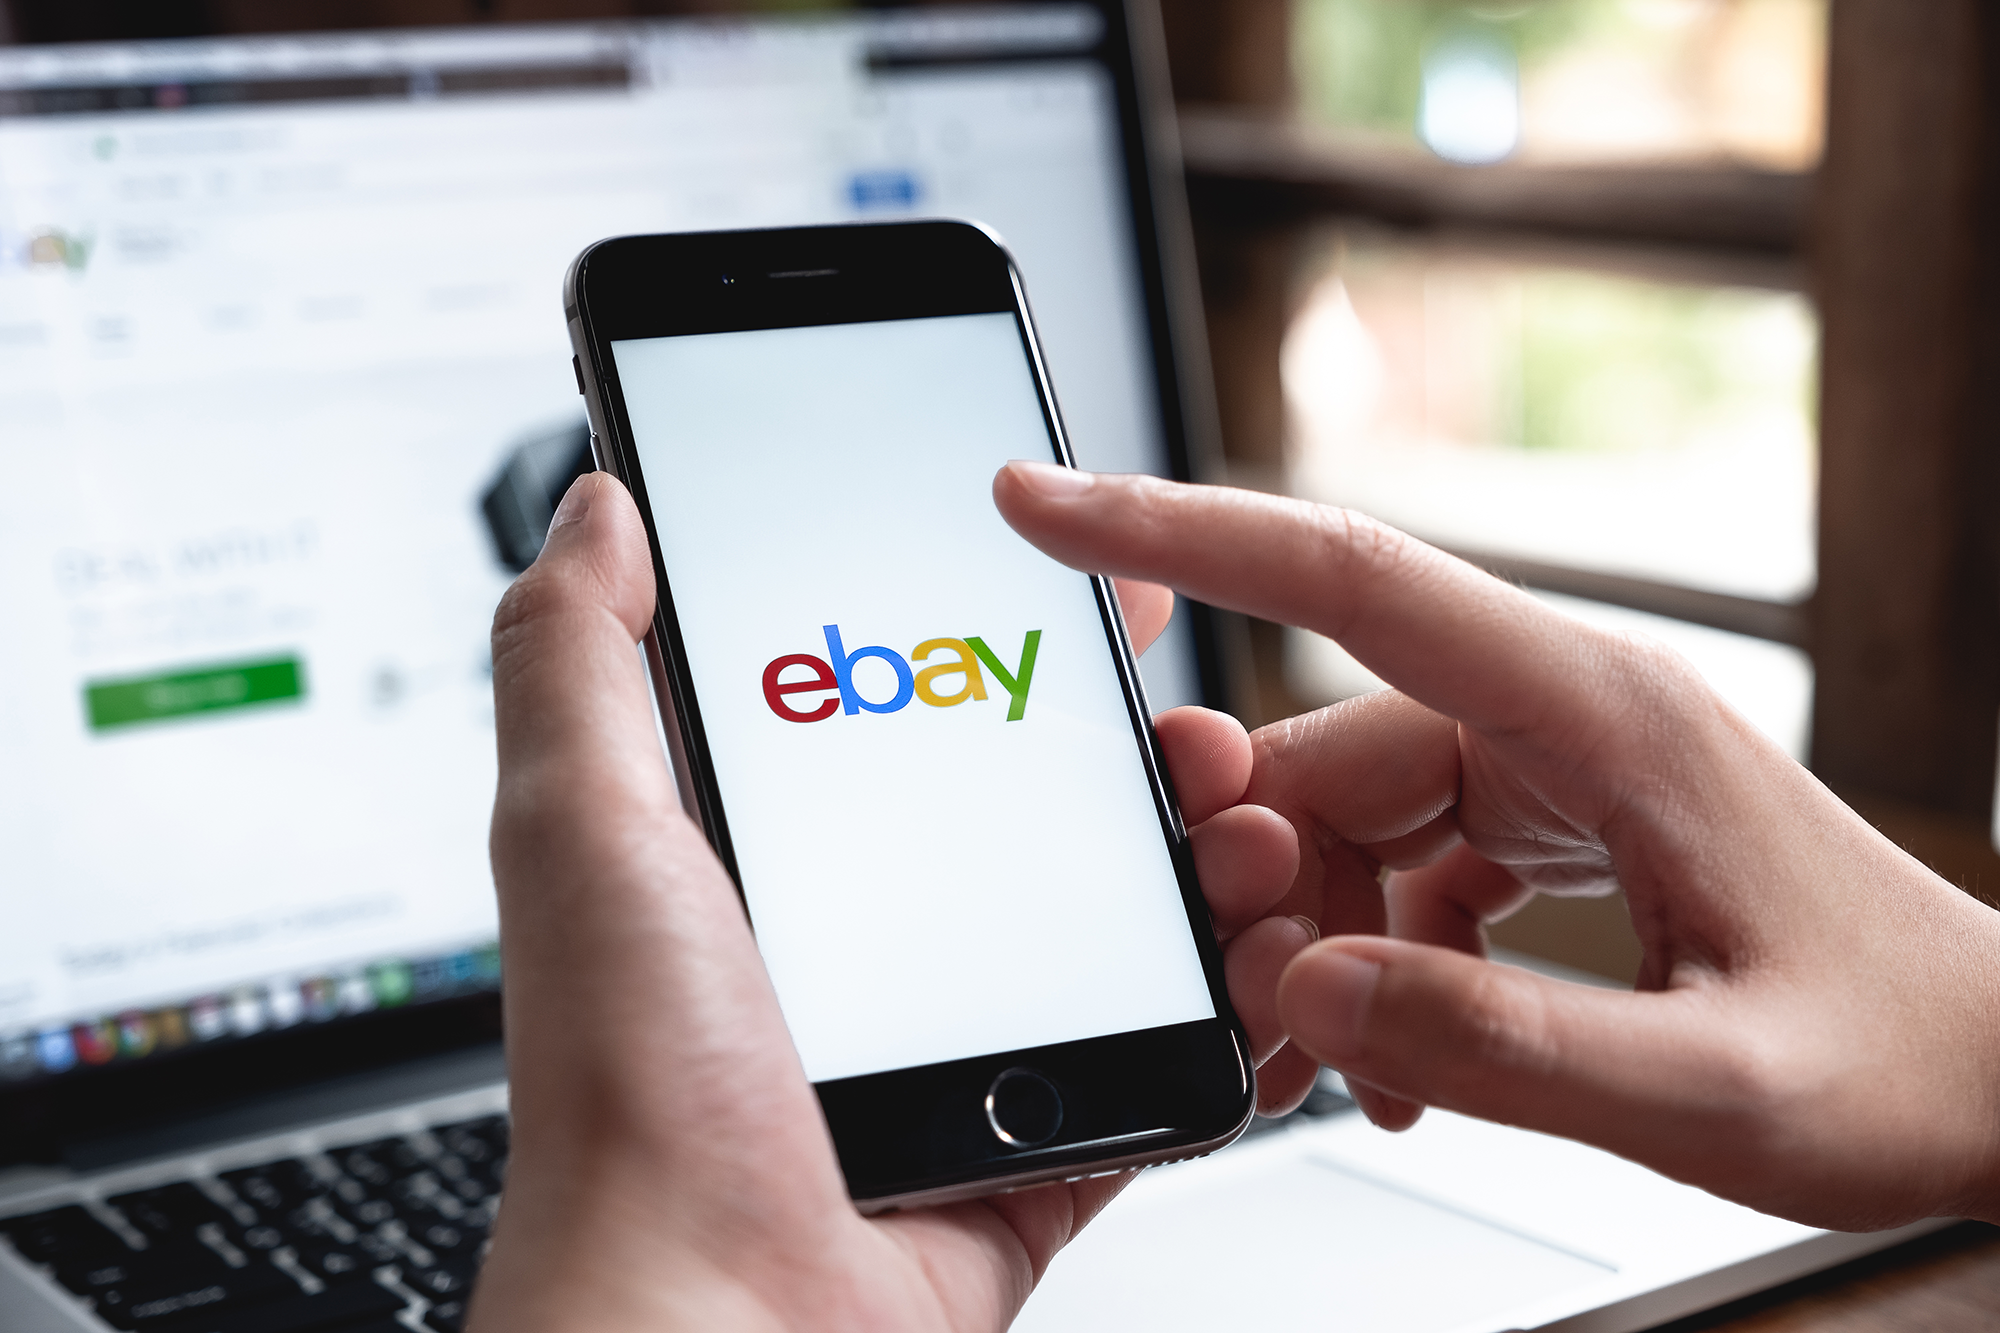 eBay app. (Image: Shutterstock/Natee Meepian)